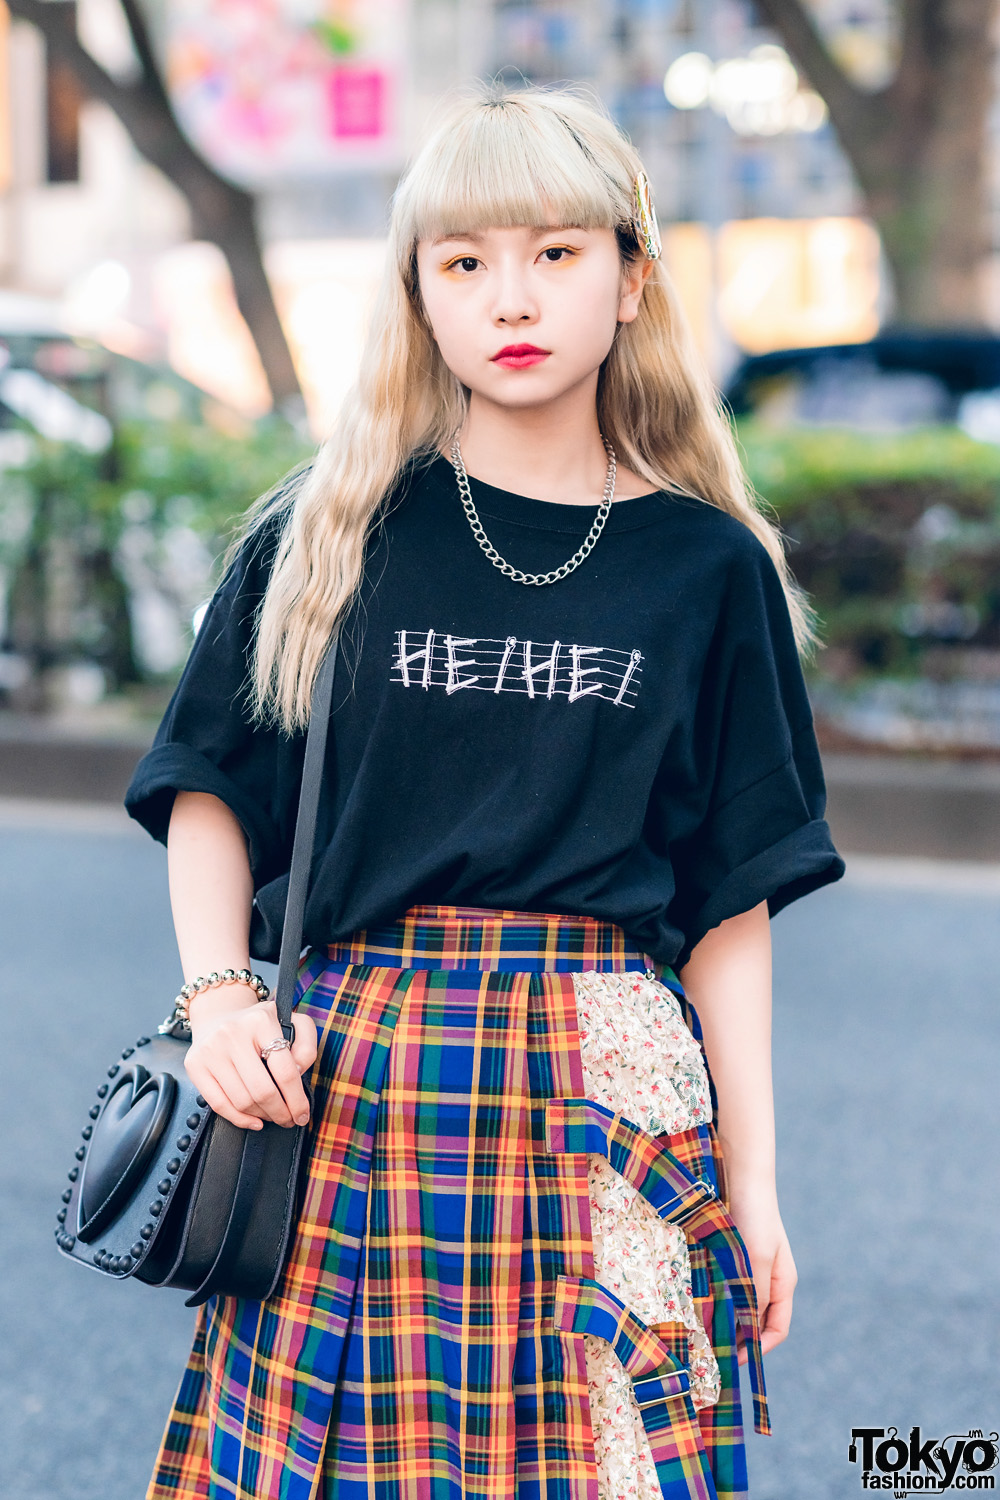 HEIHEI Harajuku Streetwear Style w/ Logo T-Shirt, Layered Plaid Skirt ...